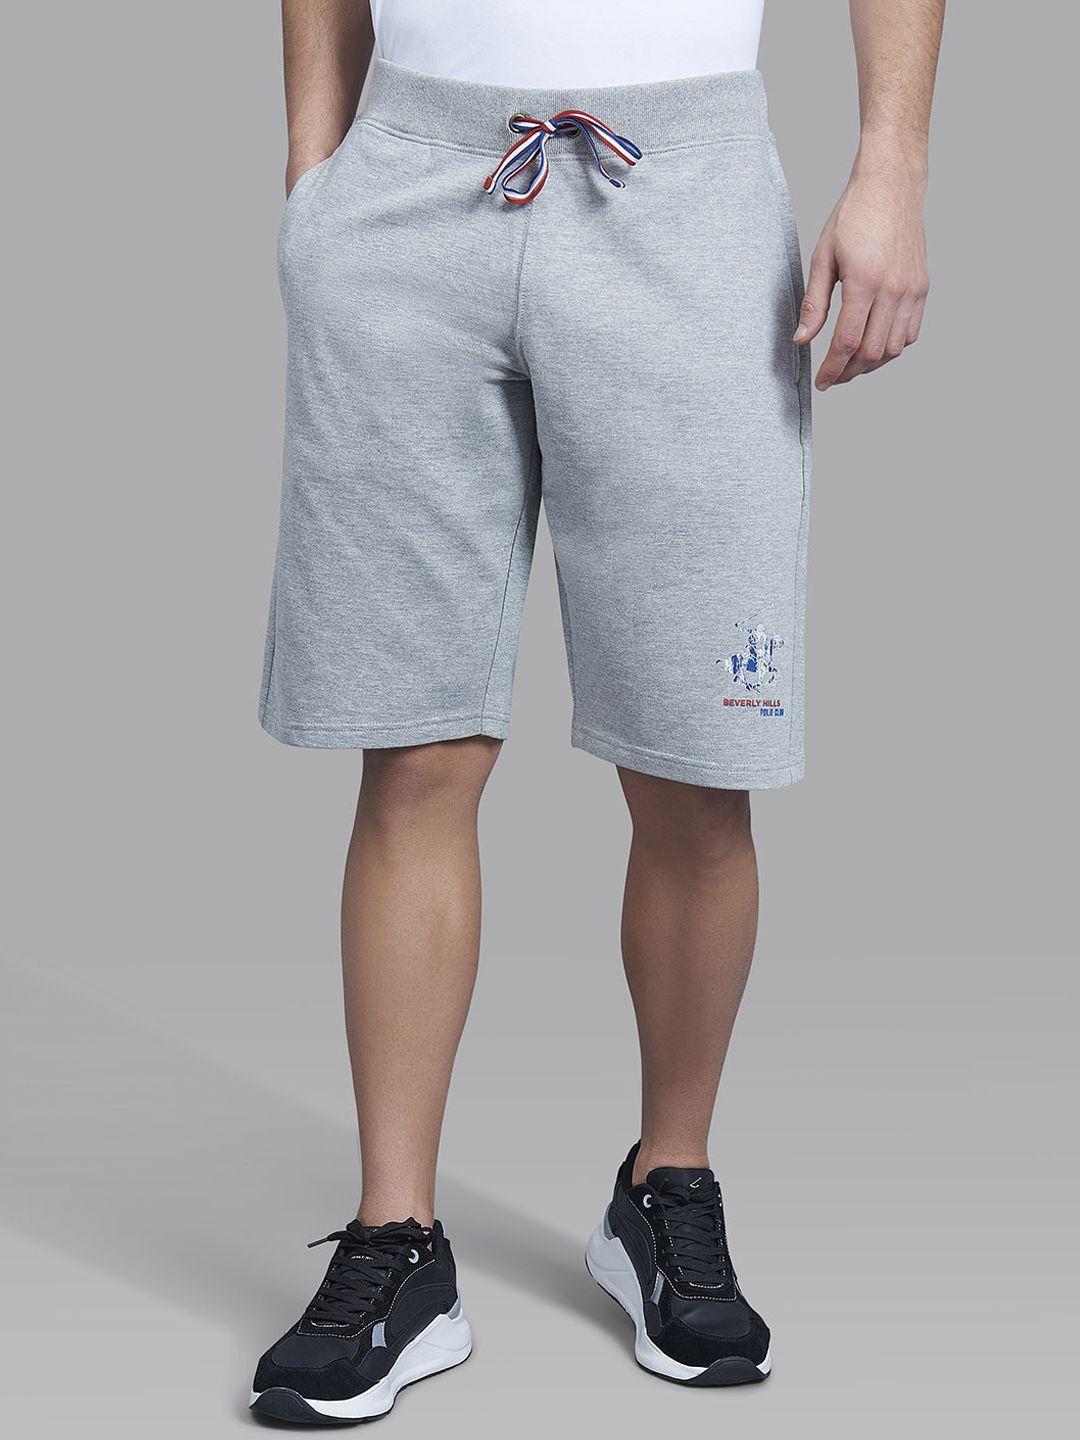 beverly-hills-polo-club-men-grey-cotton-shorts